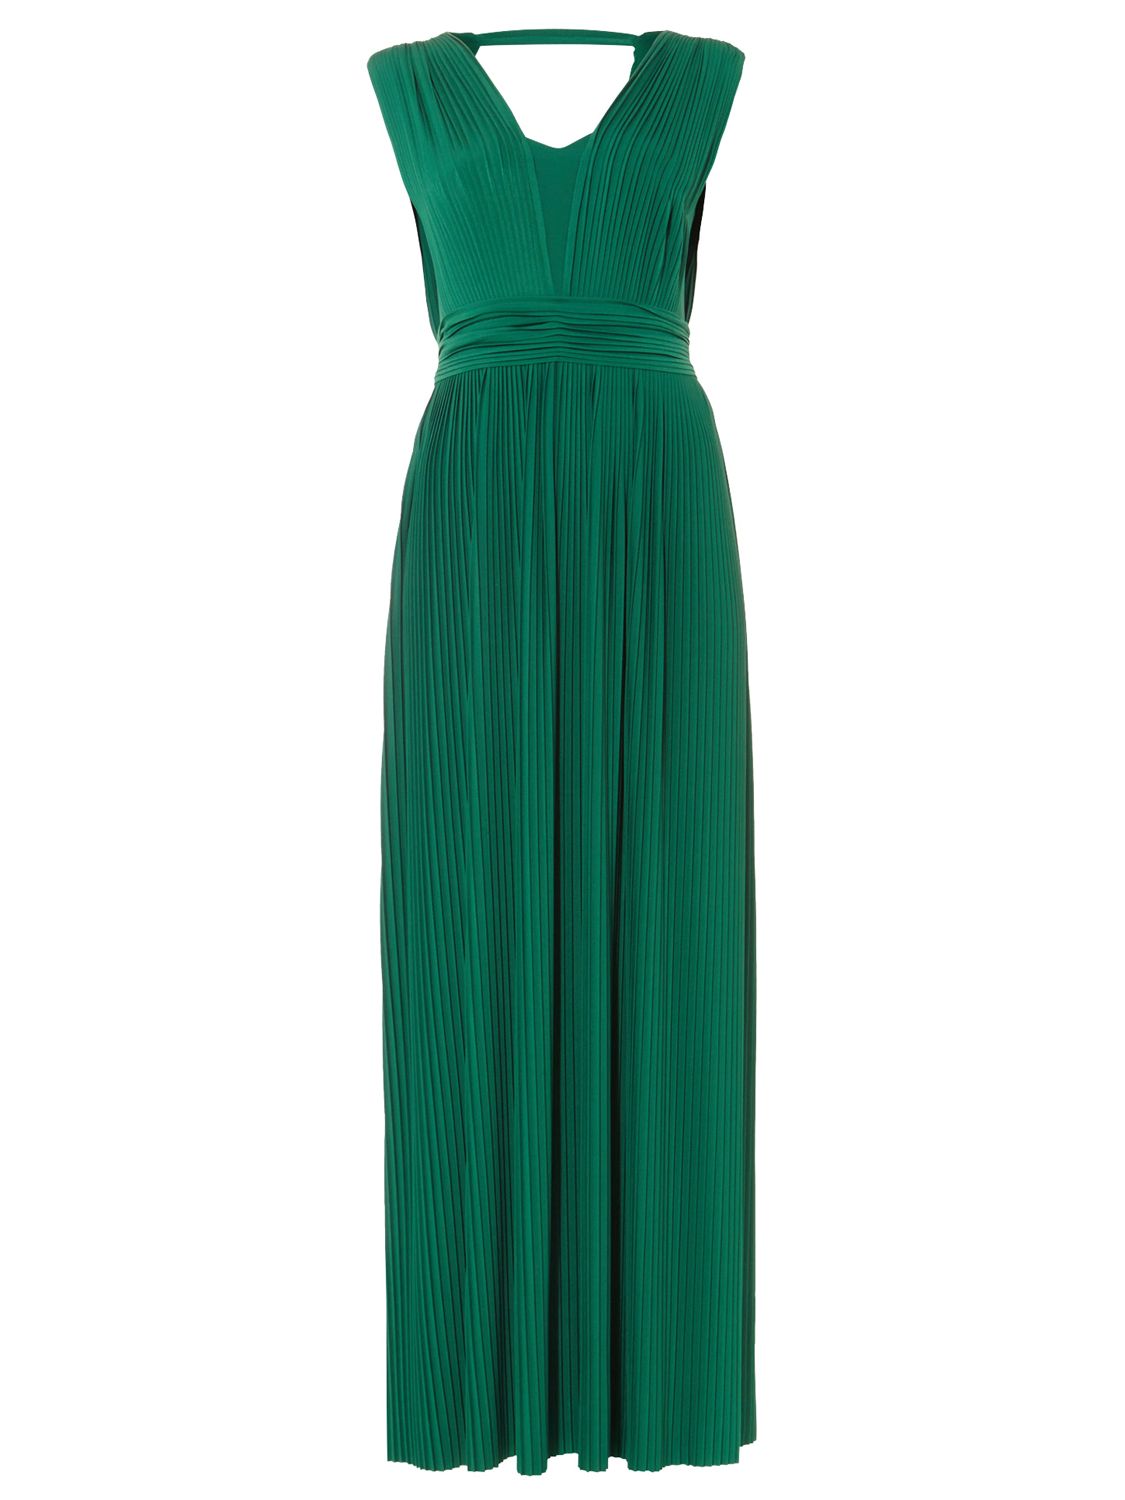 Phase Eight Aldora Pleat Dress, Emerald at John Lewis & Partners